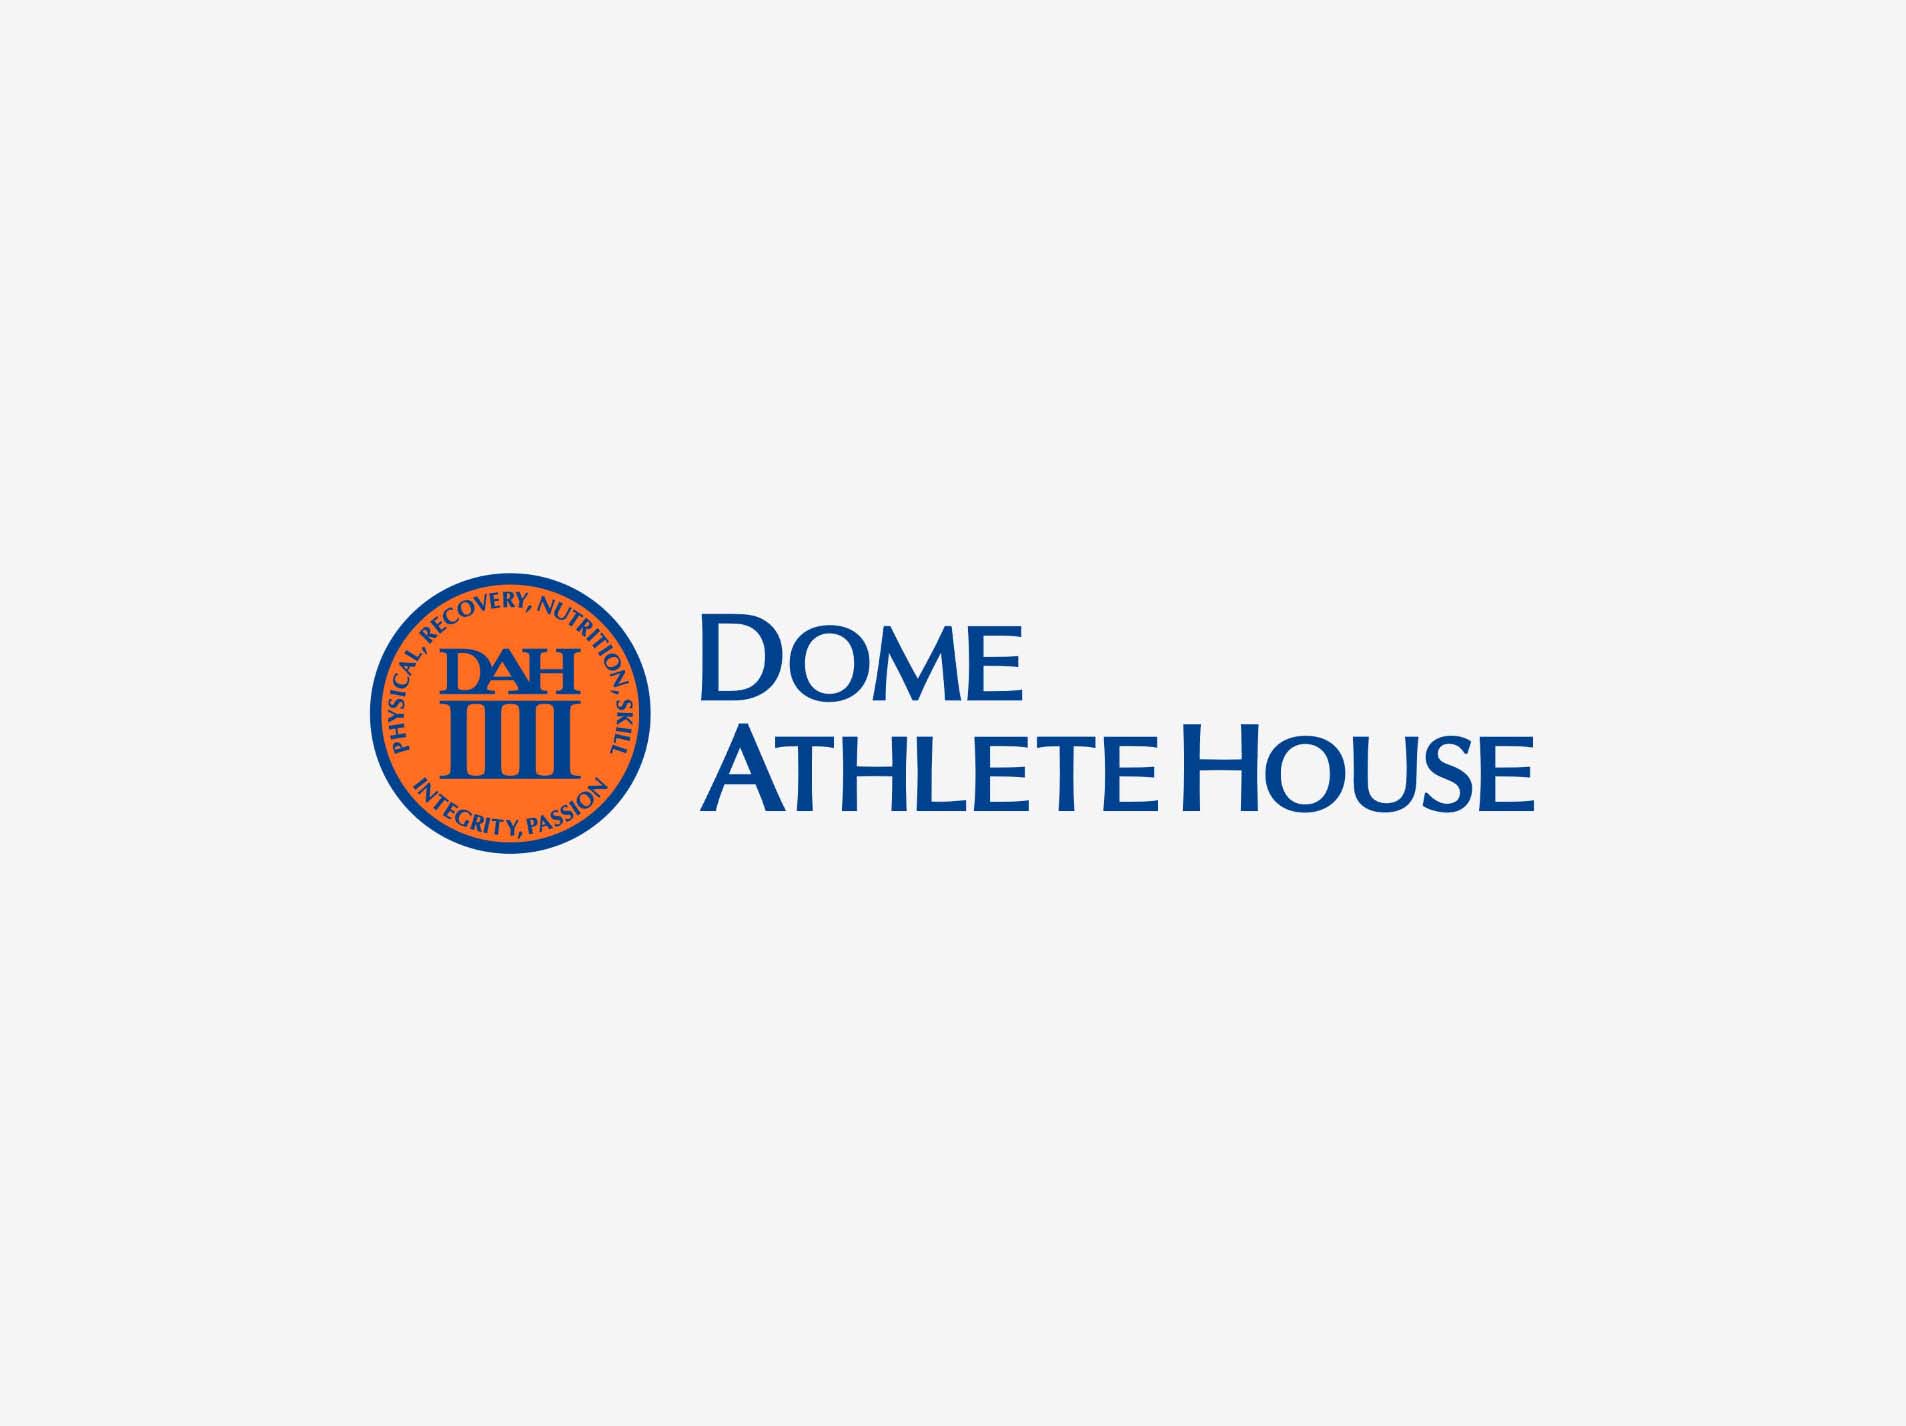 dome athlete house branding